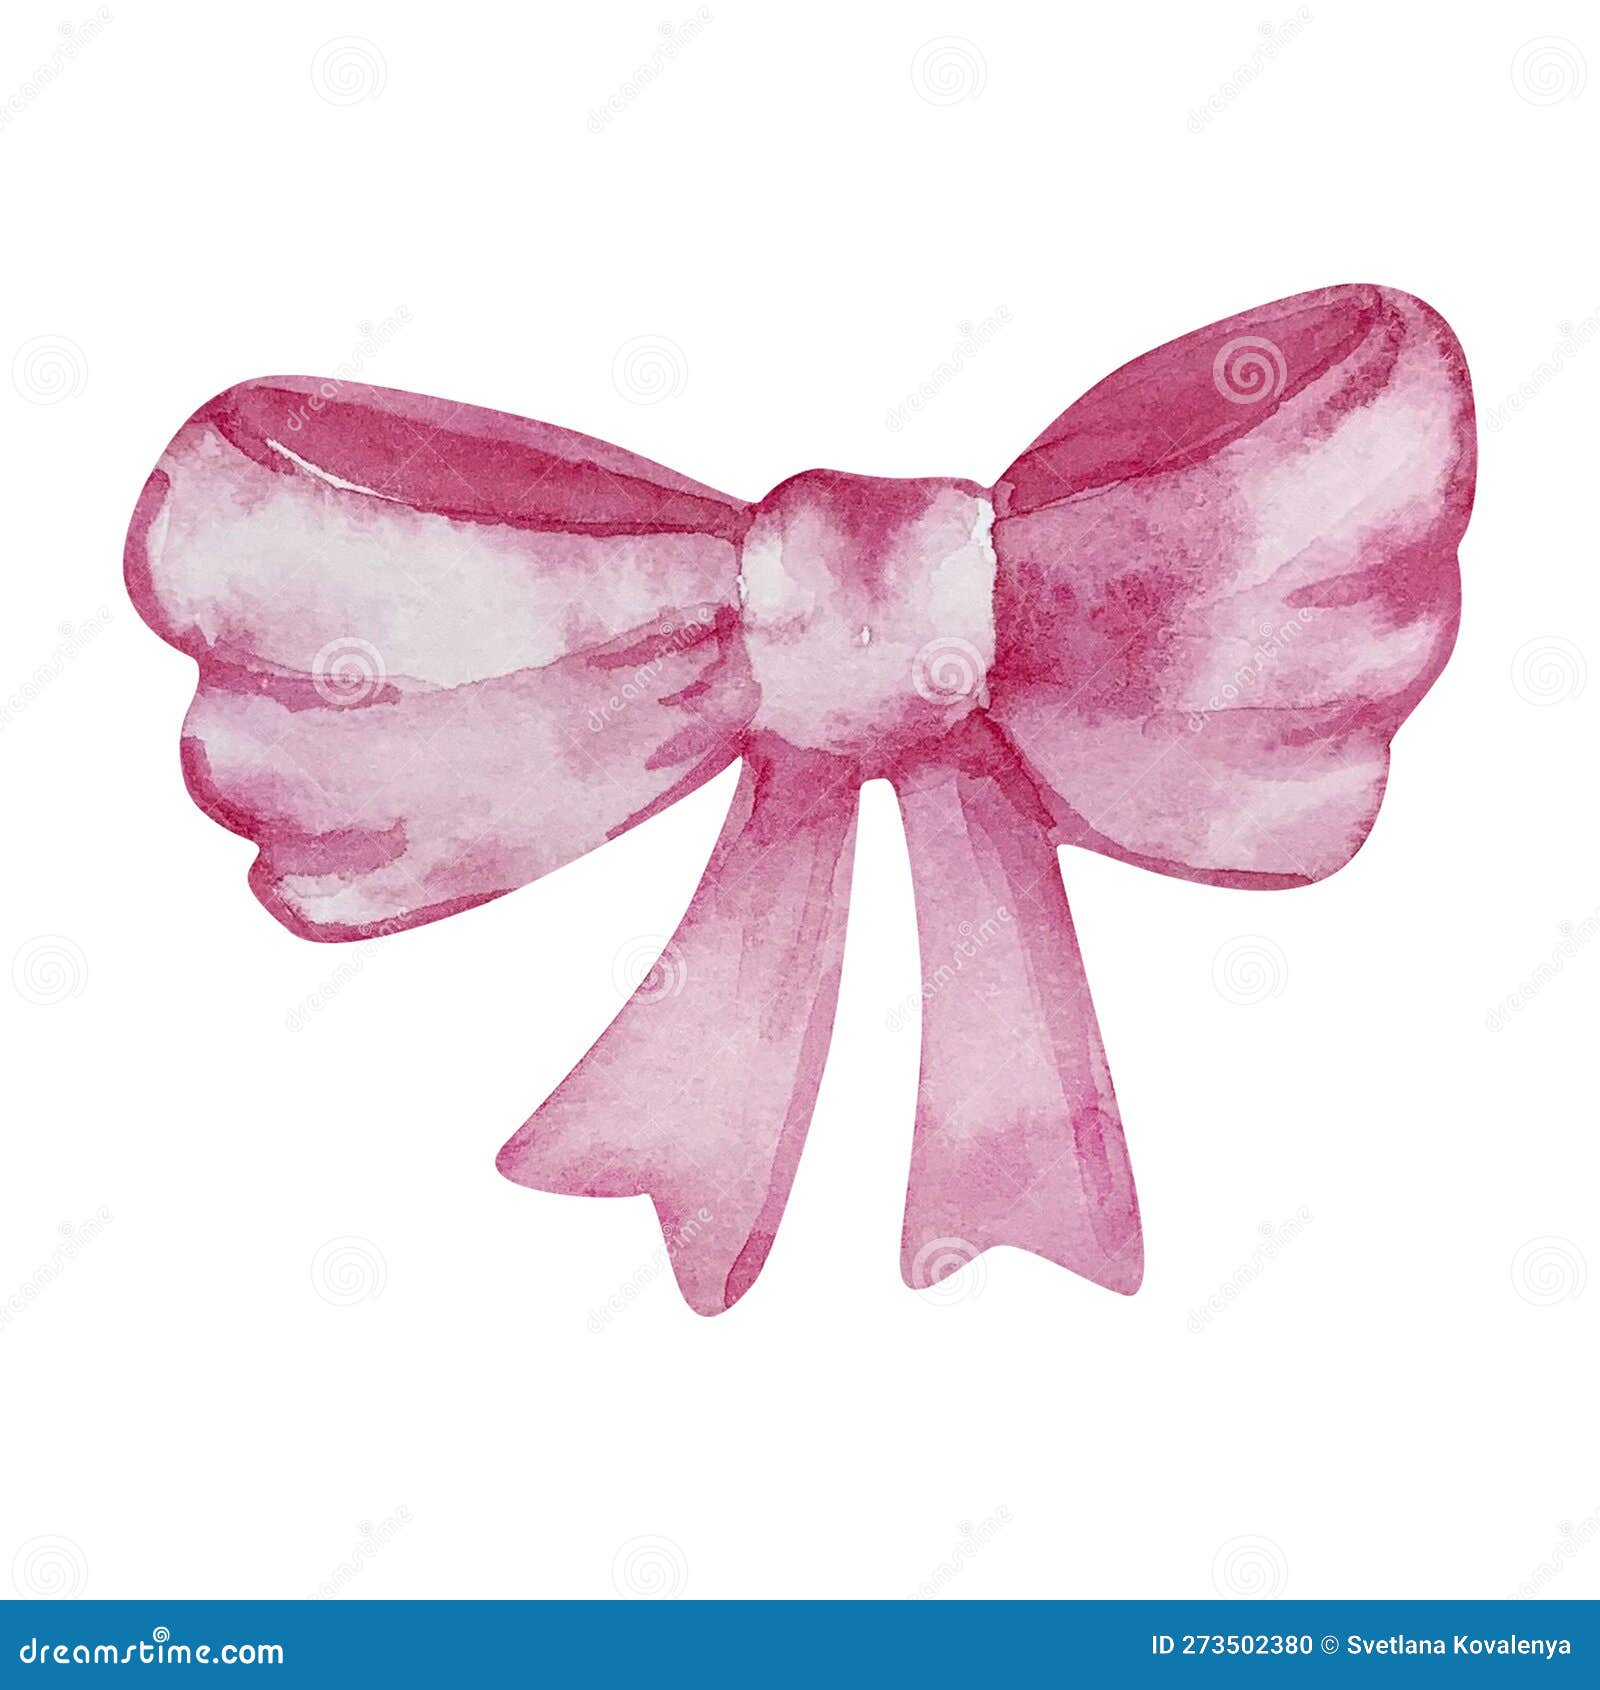 Watercolor pink ribbon bow Stock Illustration